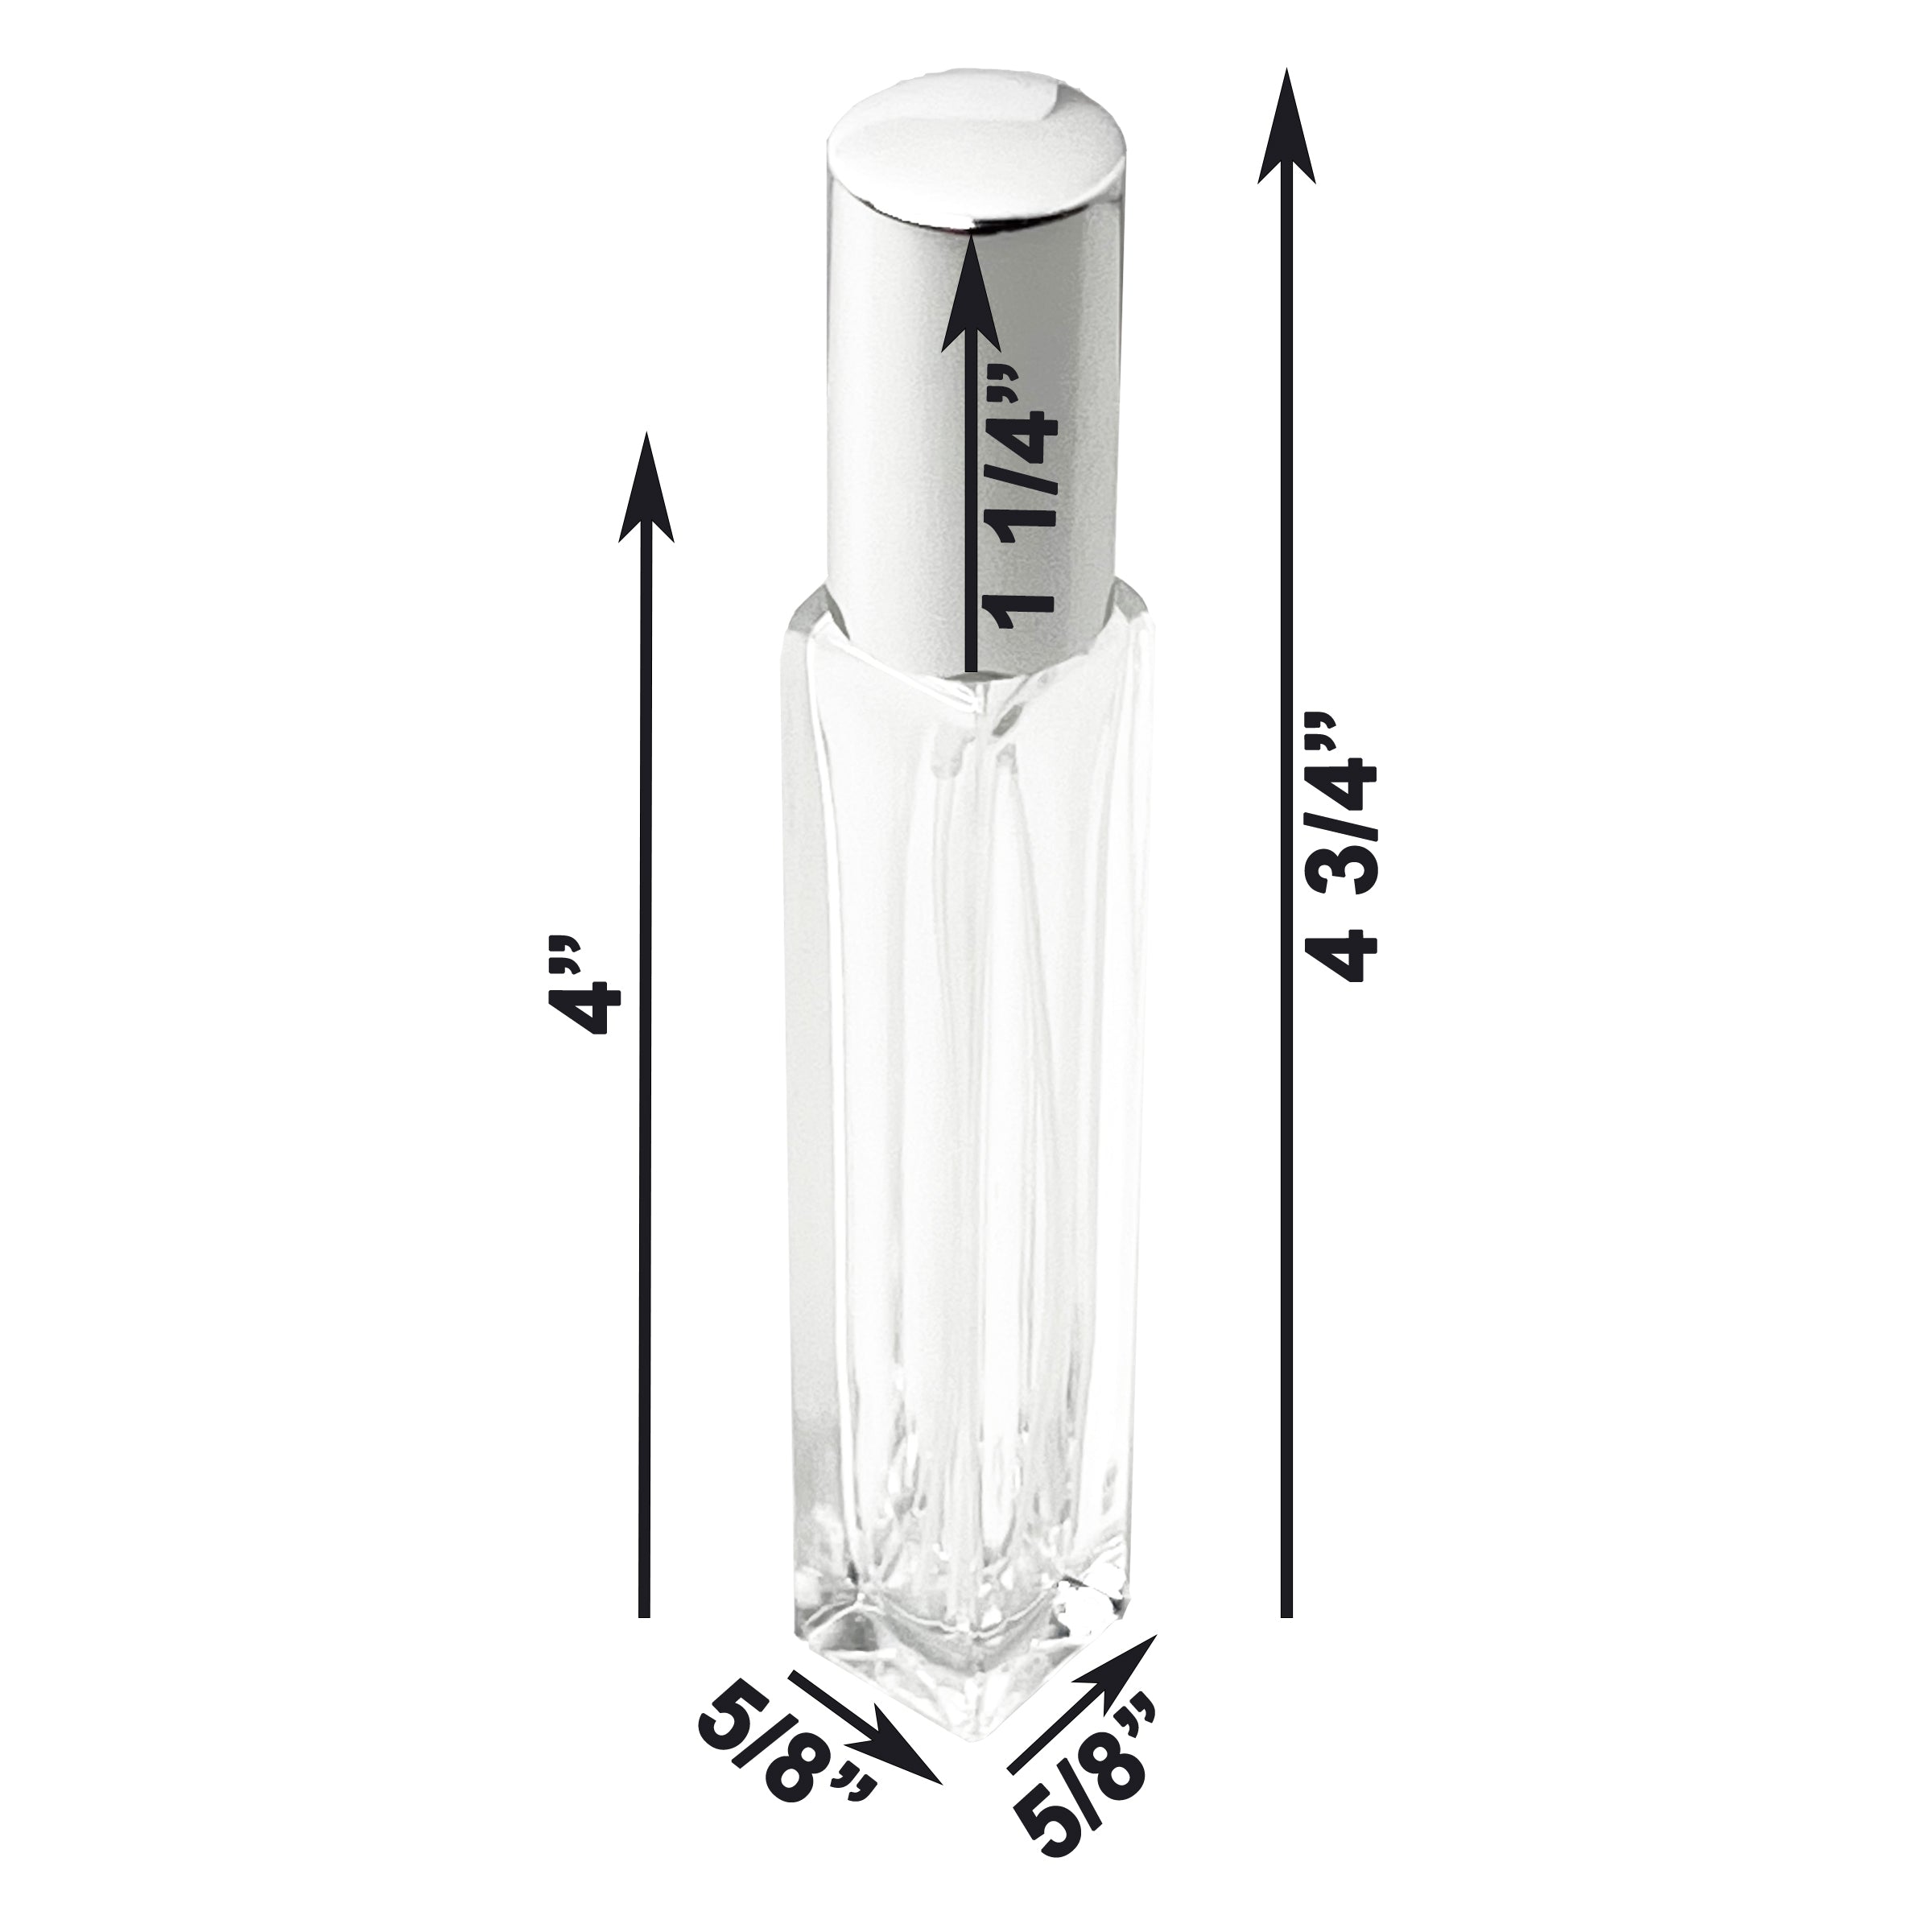 10ml 0.33oz Square Glass Spray Bottle Aluminum Atomizer